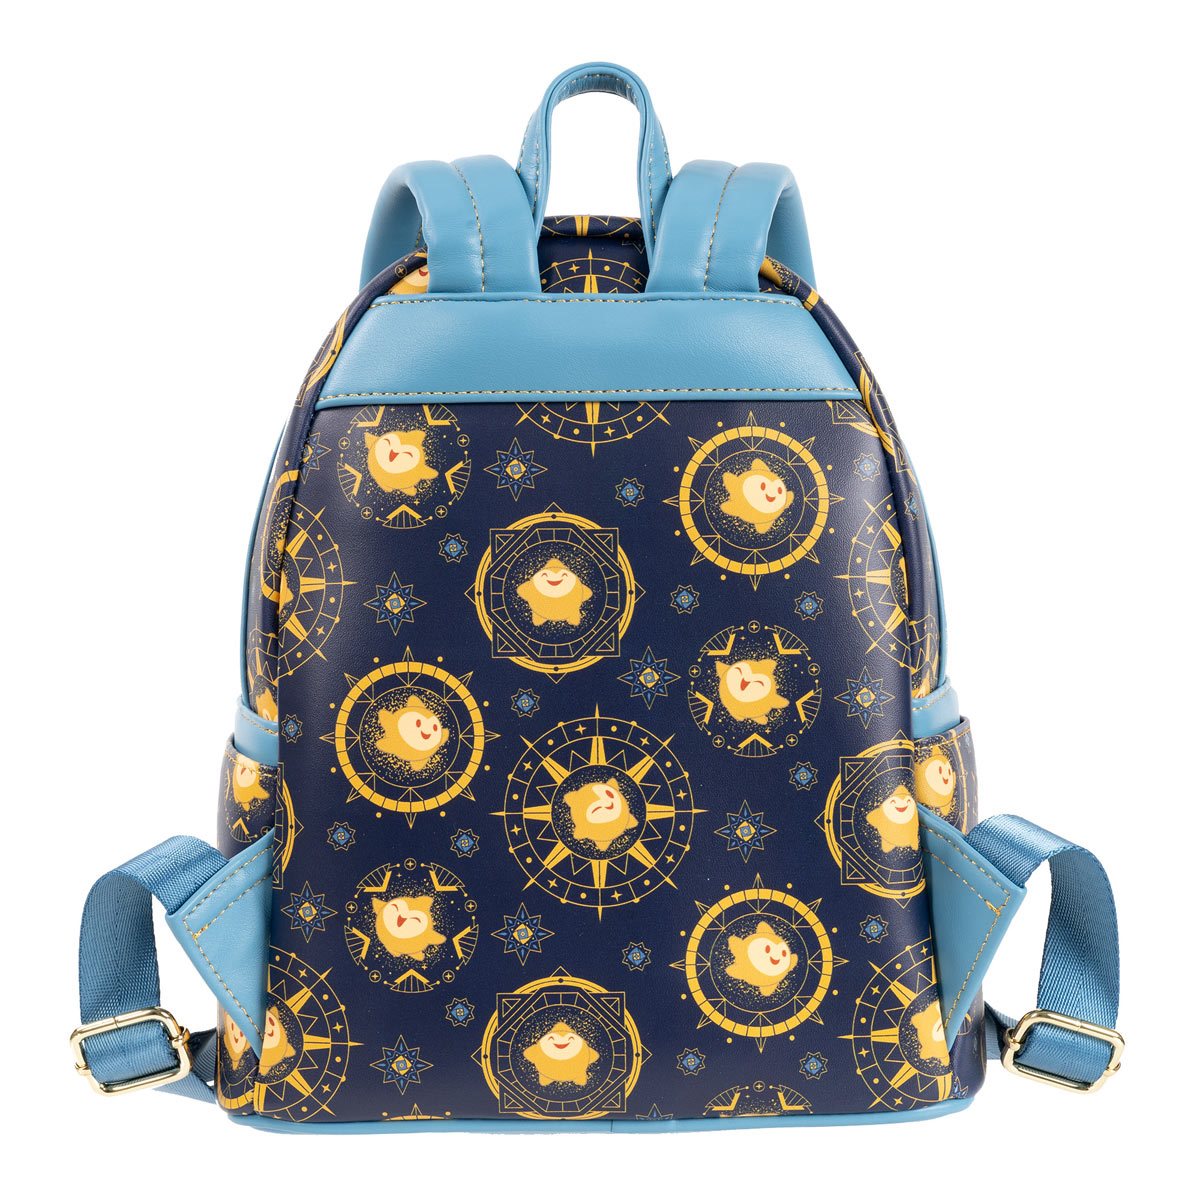 Kids' Disney Wish Star Bag - Yellow - Disney Store